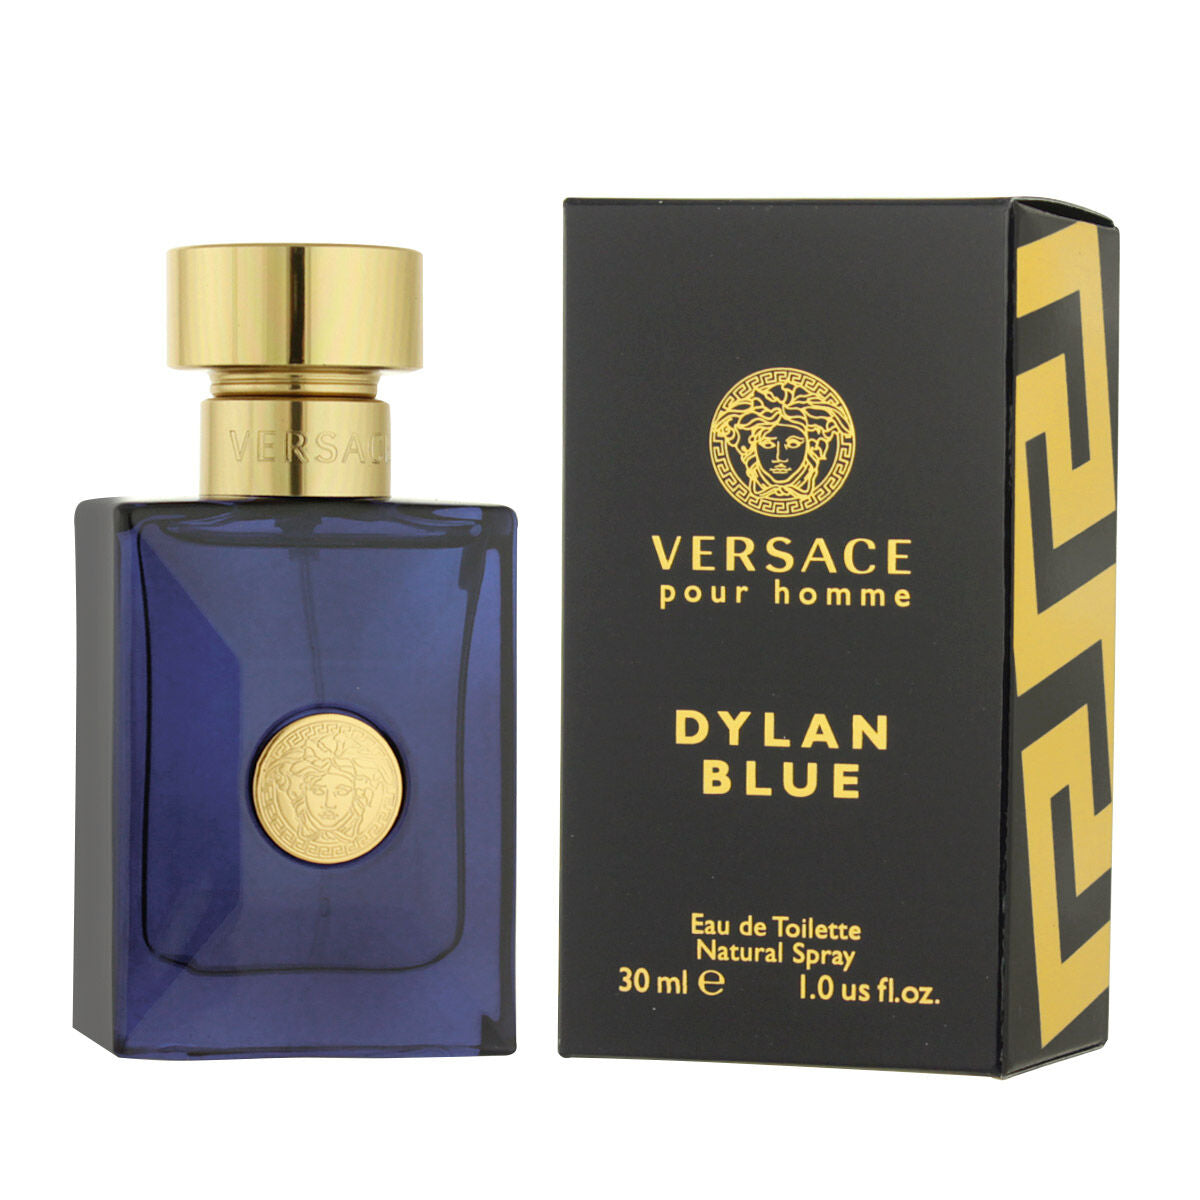 Parfum Homme Versace EDT Pour Homme Dylan Blue 30 ml - Versace - Jardin D'Eyden - jardindeyden.fr